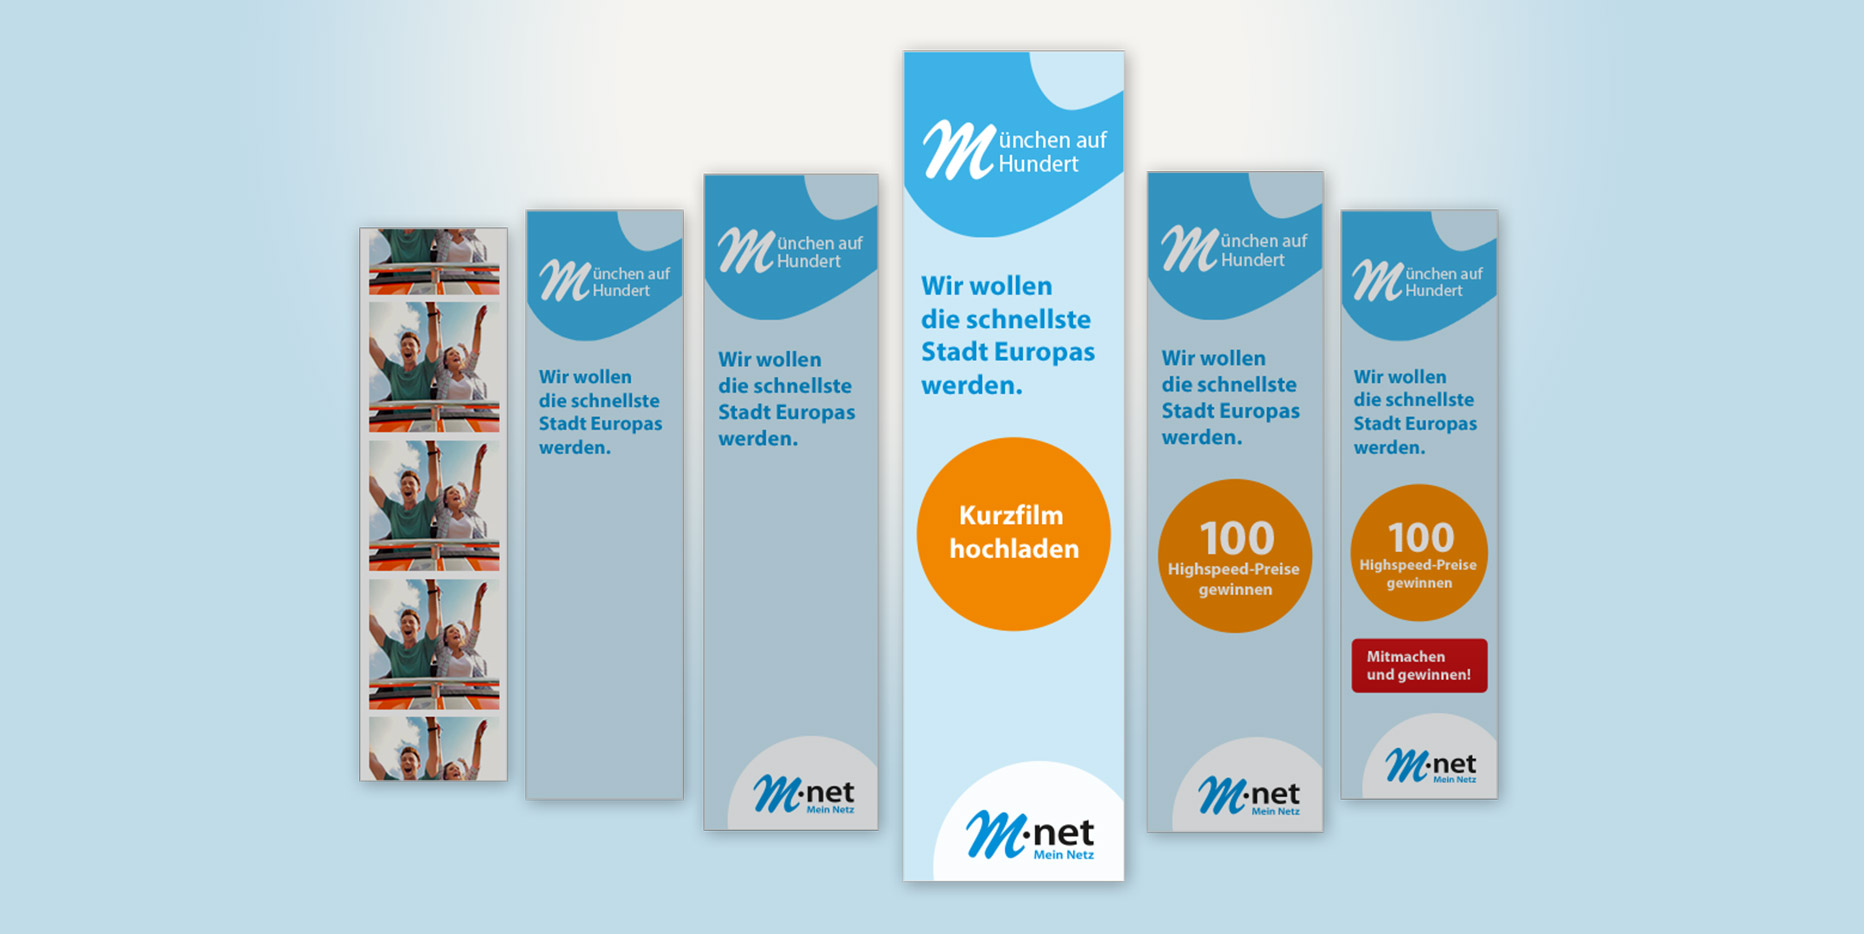 Banner: M-net Kampagne Muenchen auf hundert.